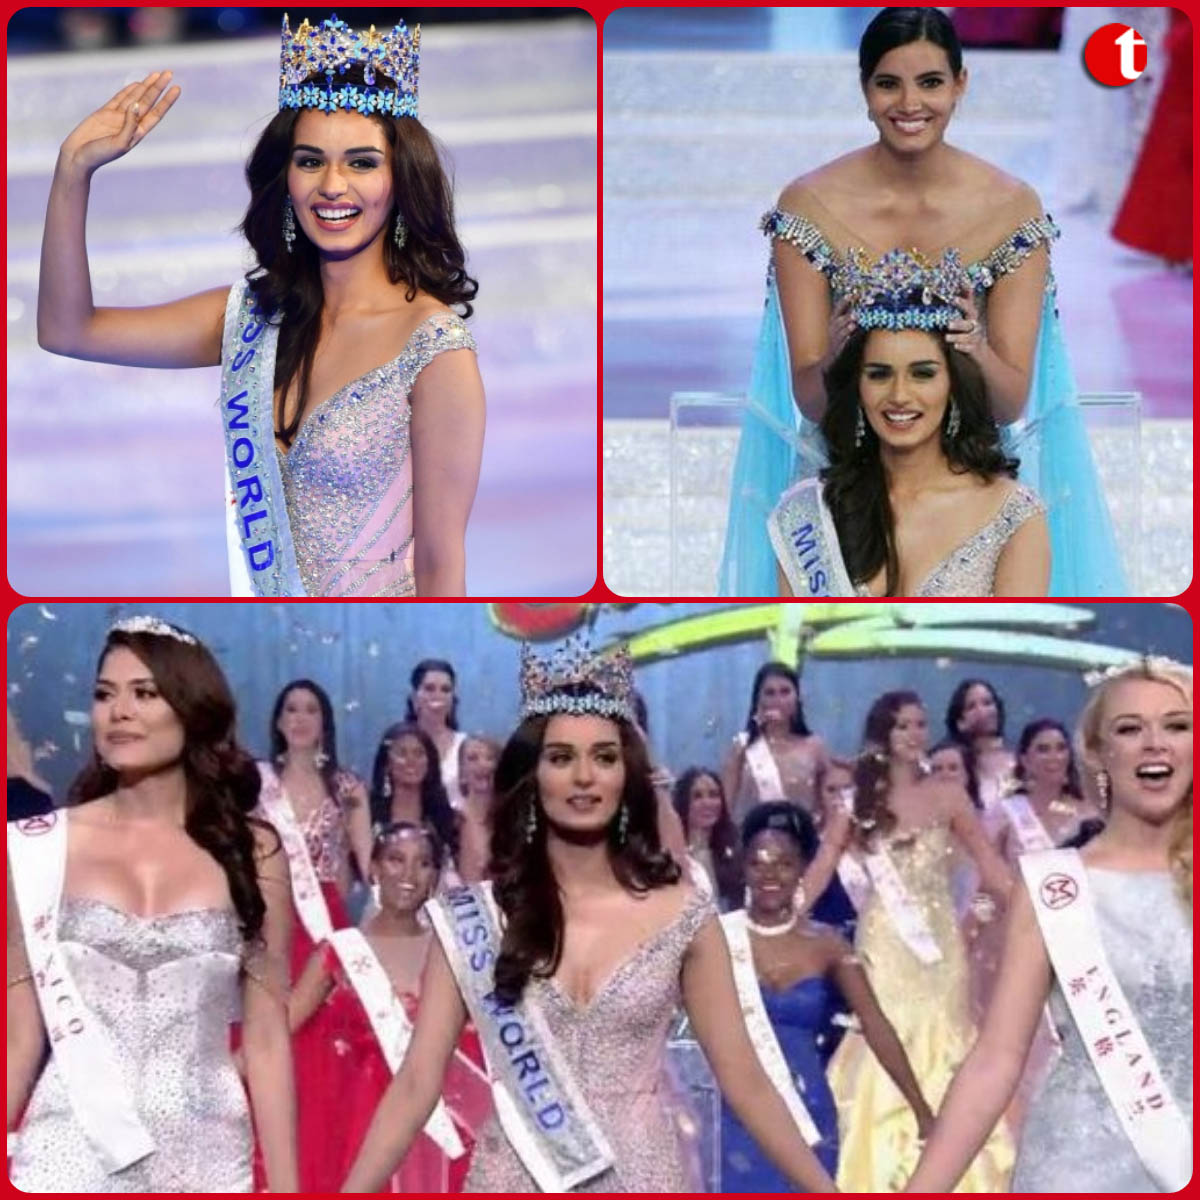 India’s Manushi Chhillar crowned Miss World 2017